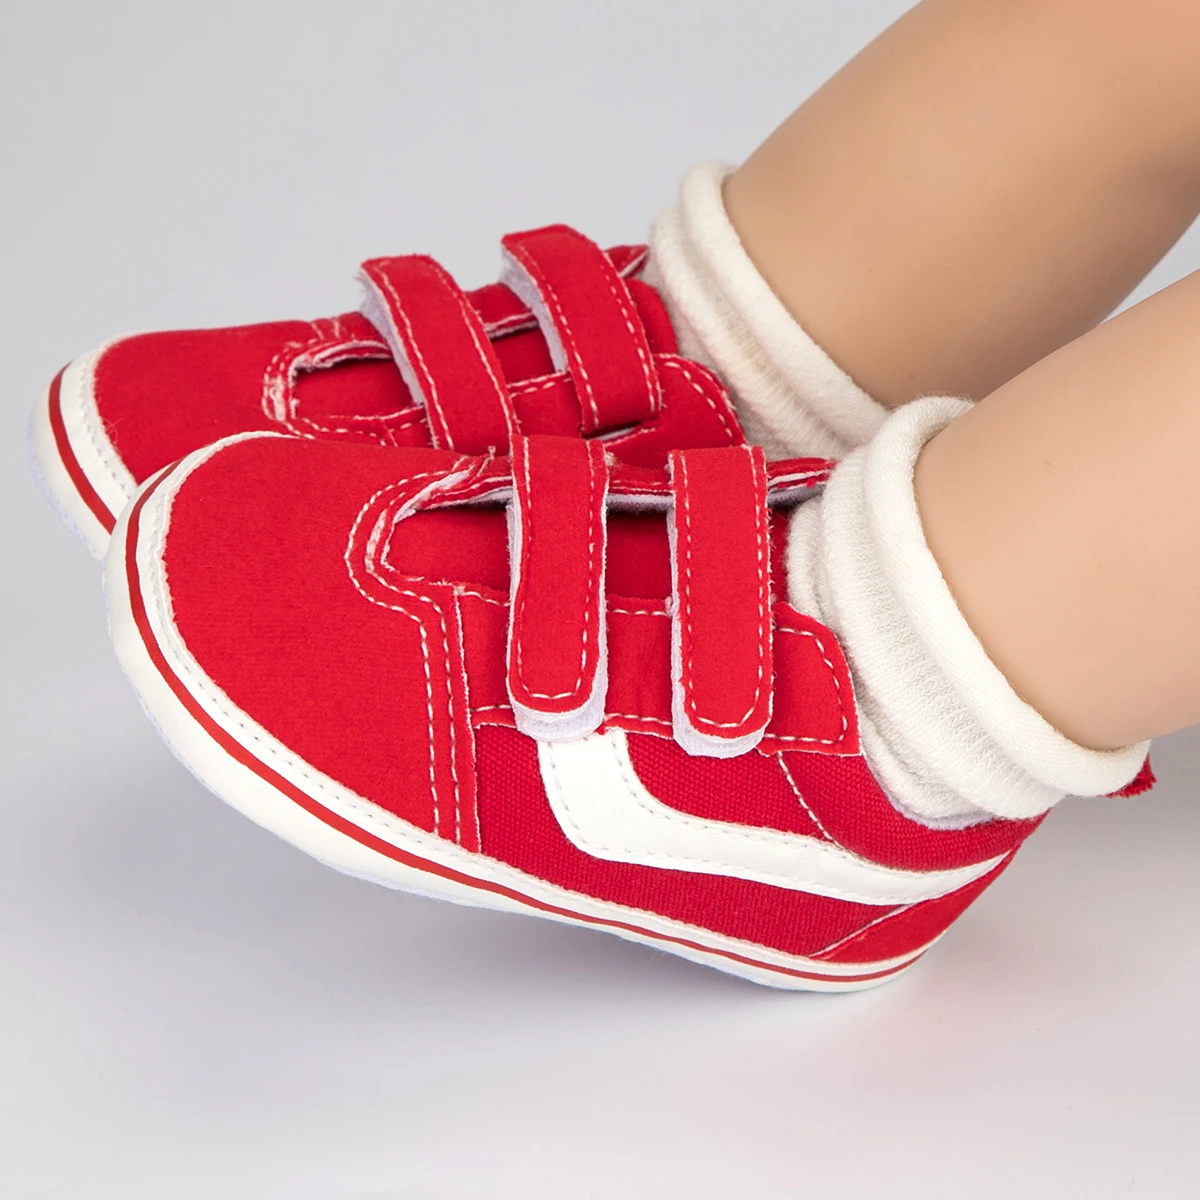 2023 New design indoor baby all-season non-slip soft sole baby shoes plaid denim newborn baby sneakers